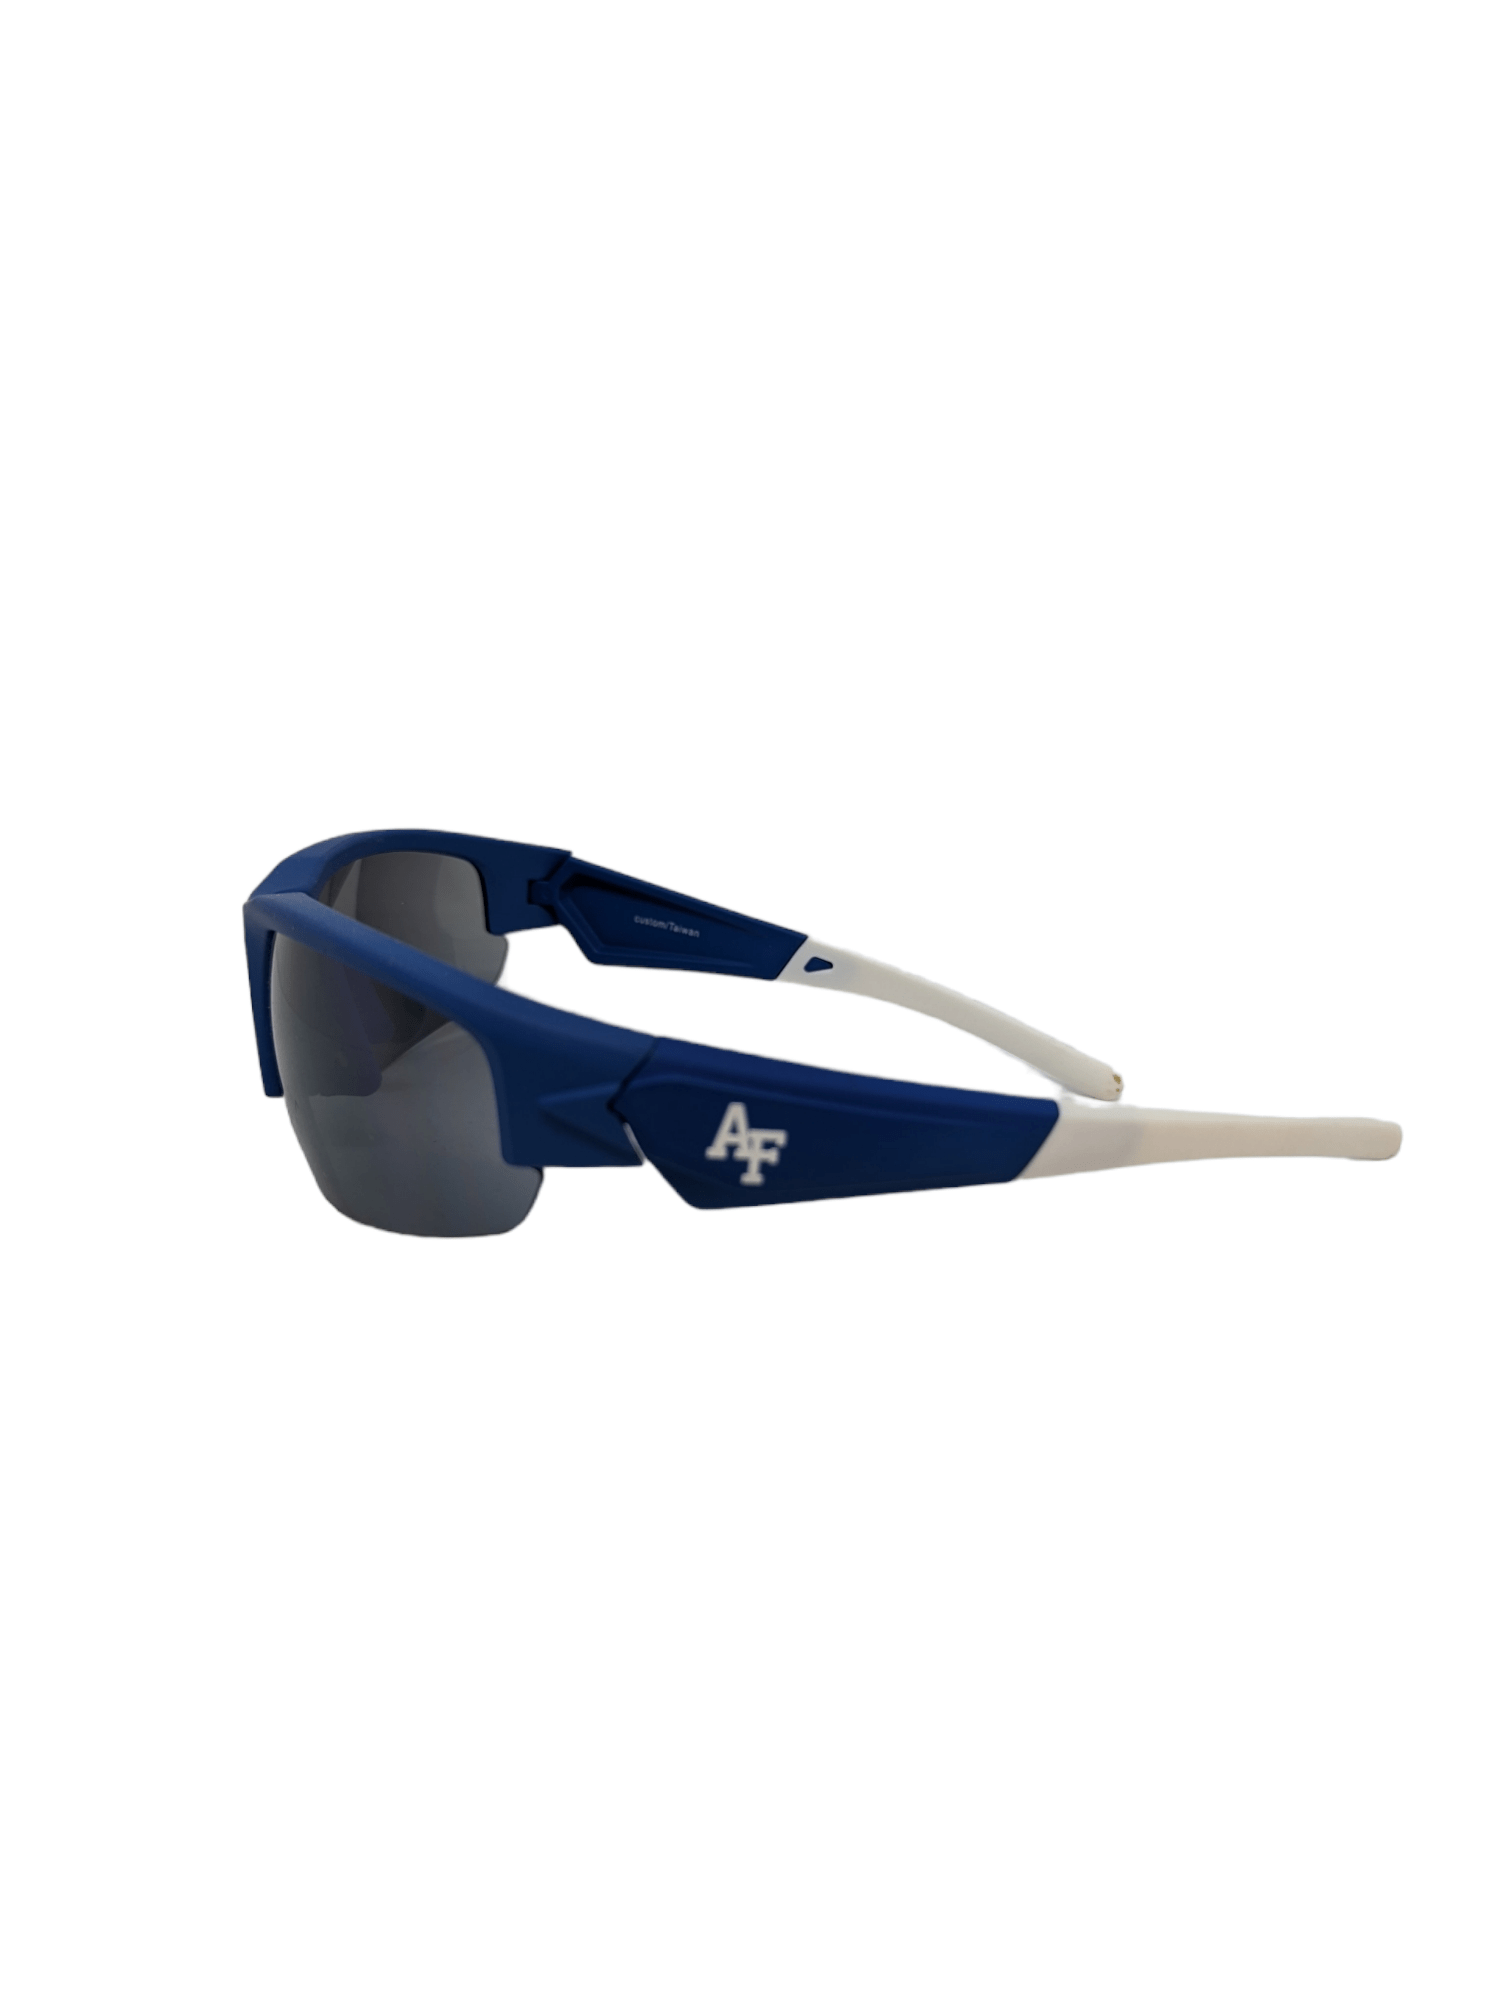 Air Force Academy Sunglasses